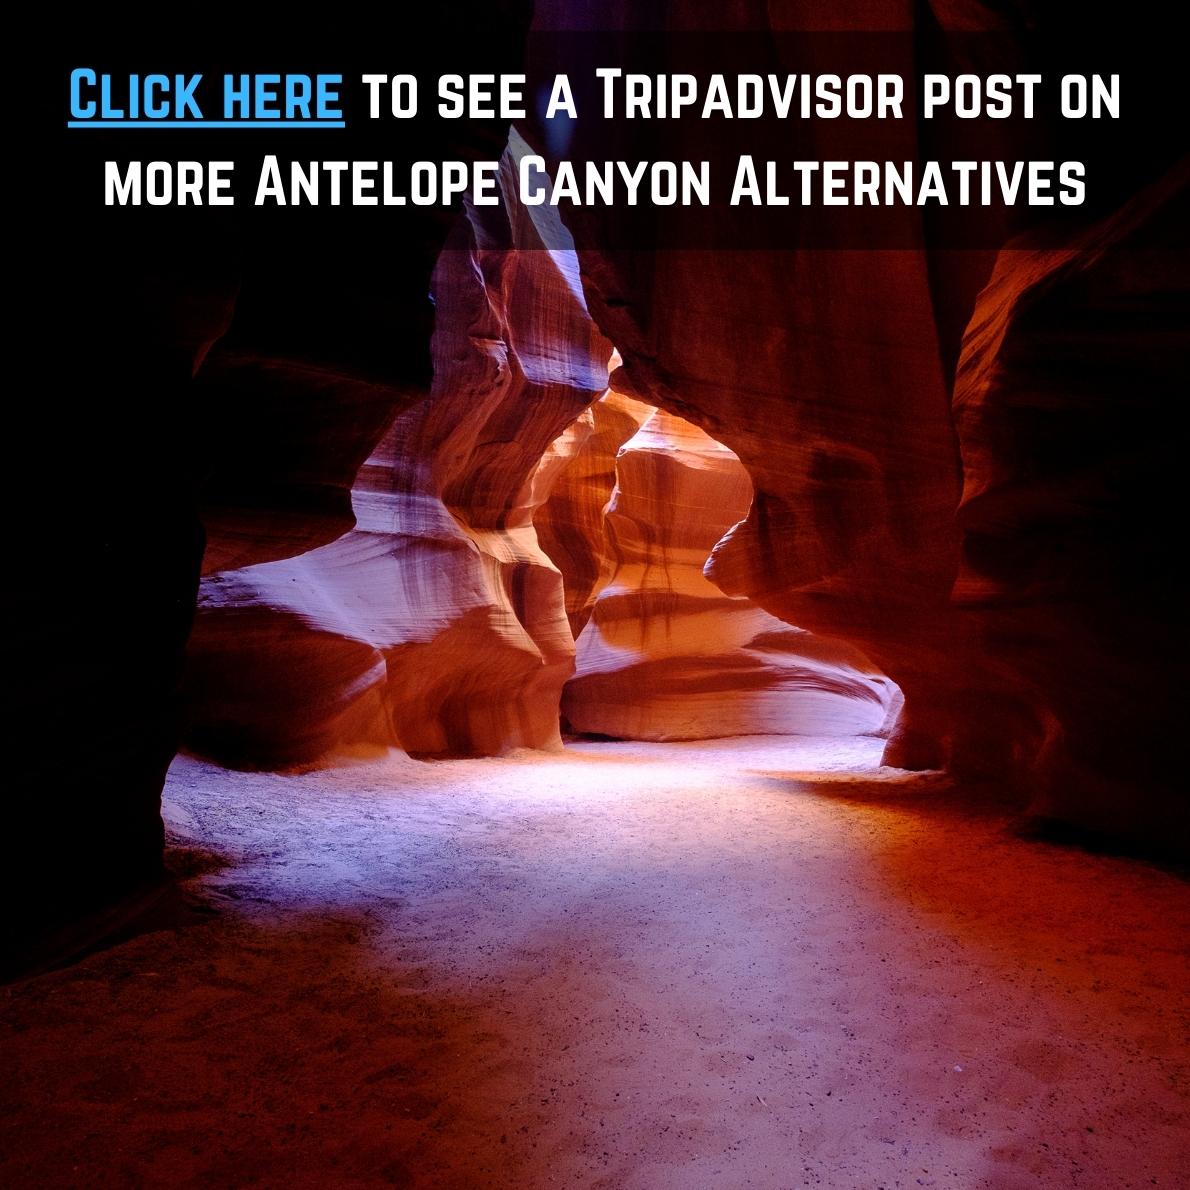 tripadvisor antelope canyon alternatives more options 02